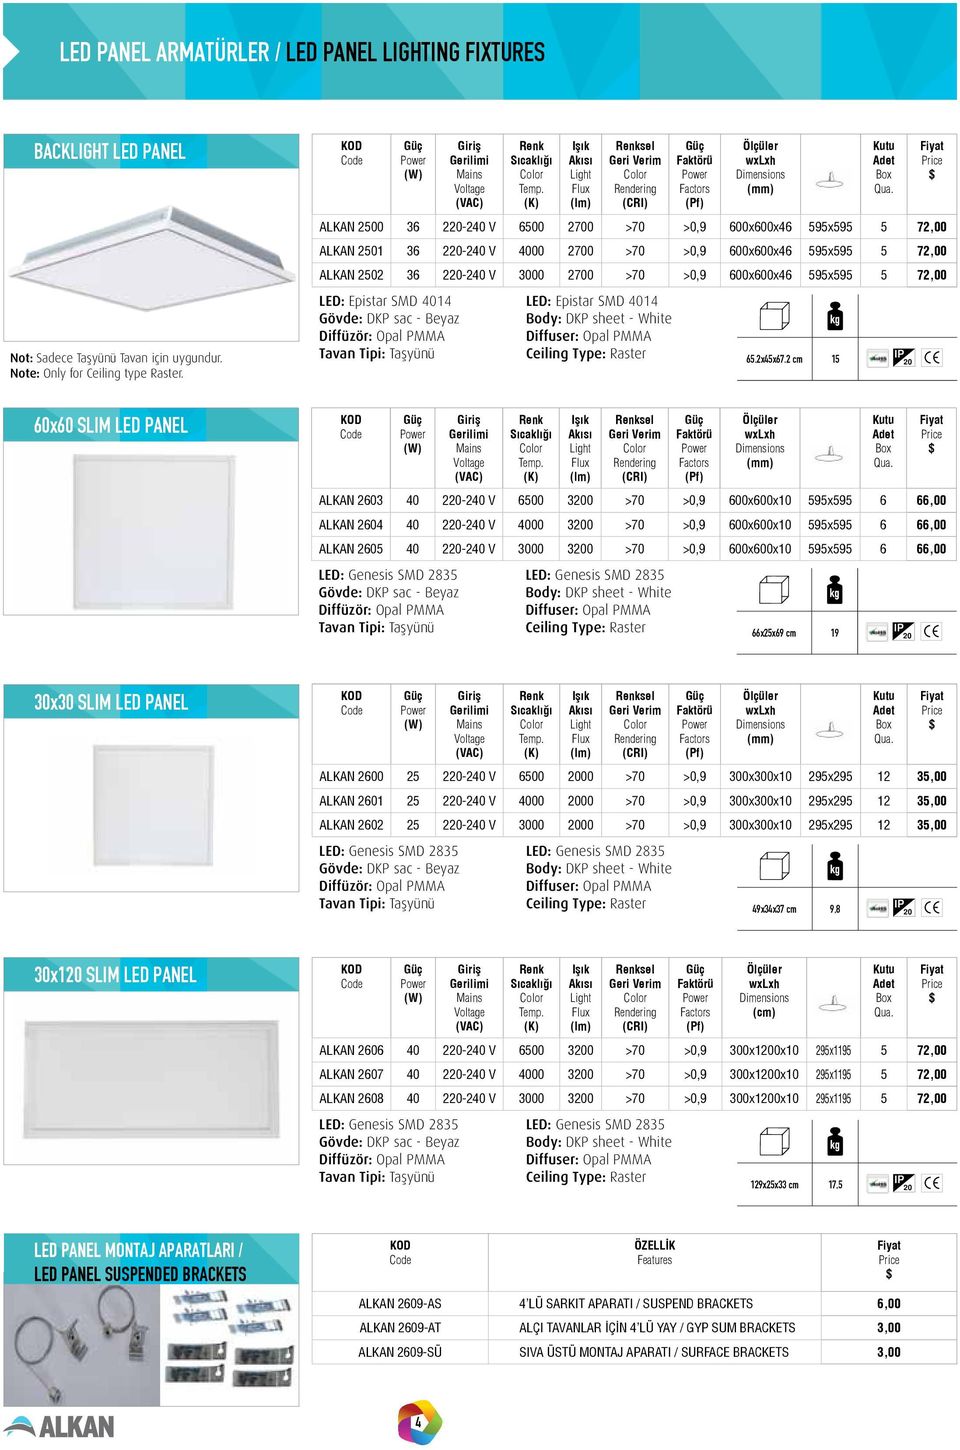 595x595 5 72,00 LED: Epistar SMD 4014 Gövde: DKP sac - Beyaz Tavan Tipi: Taşyünü LED: Epistar SMD 4014 Body: DKP sheet - White Ceiling Type: Raster 65.2x45x67.